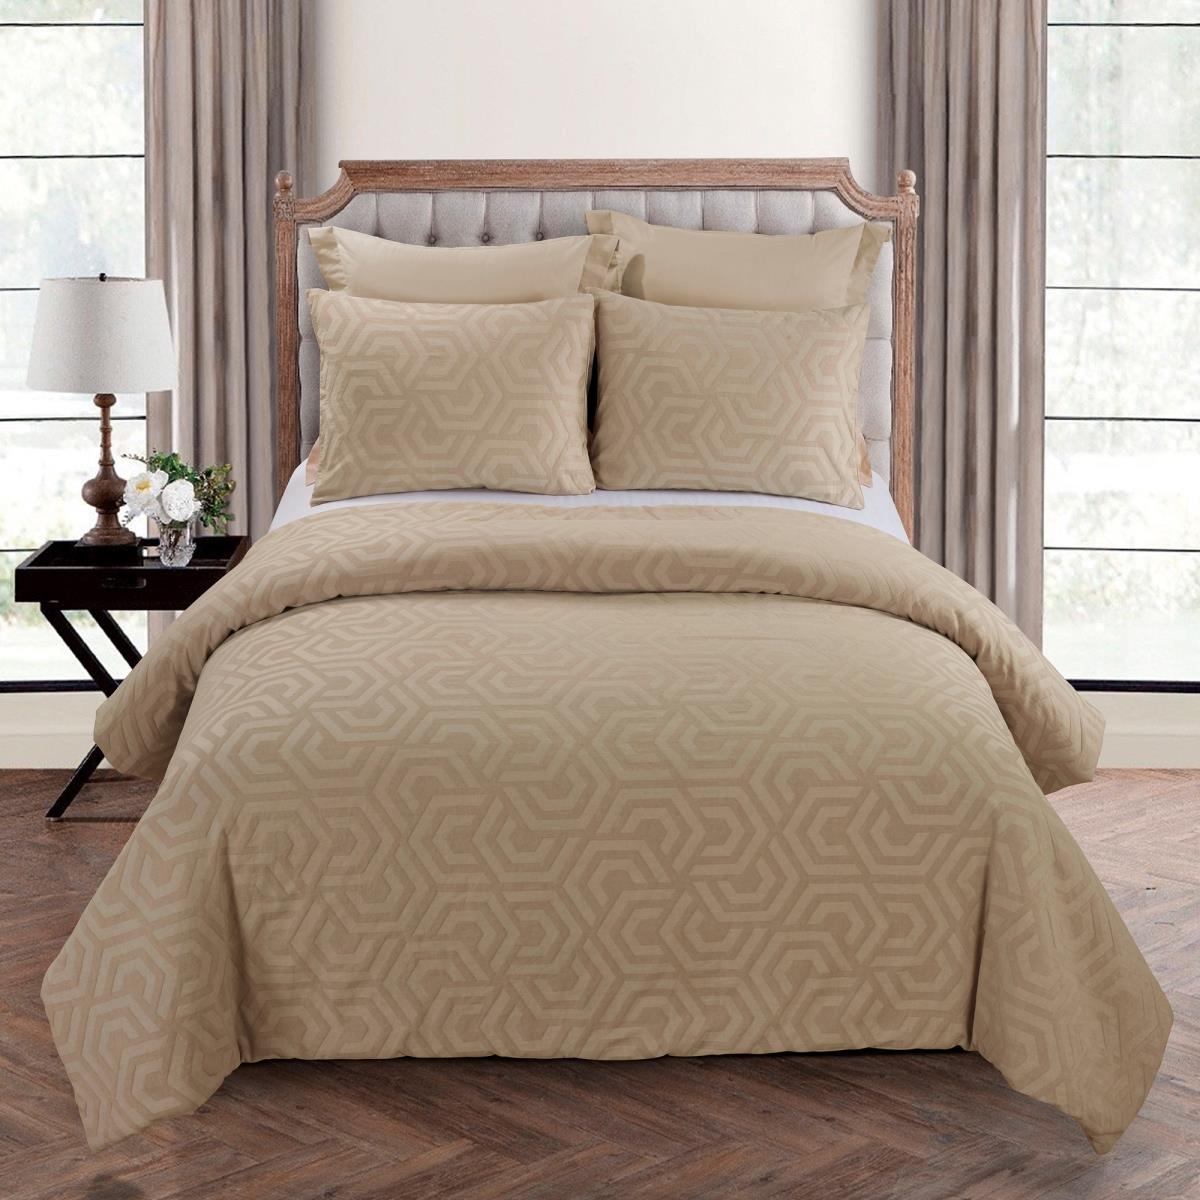 Y00714 Queen Size Comforter Set - Seville Sand